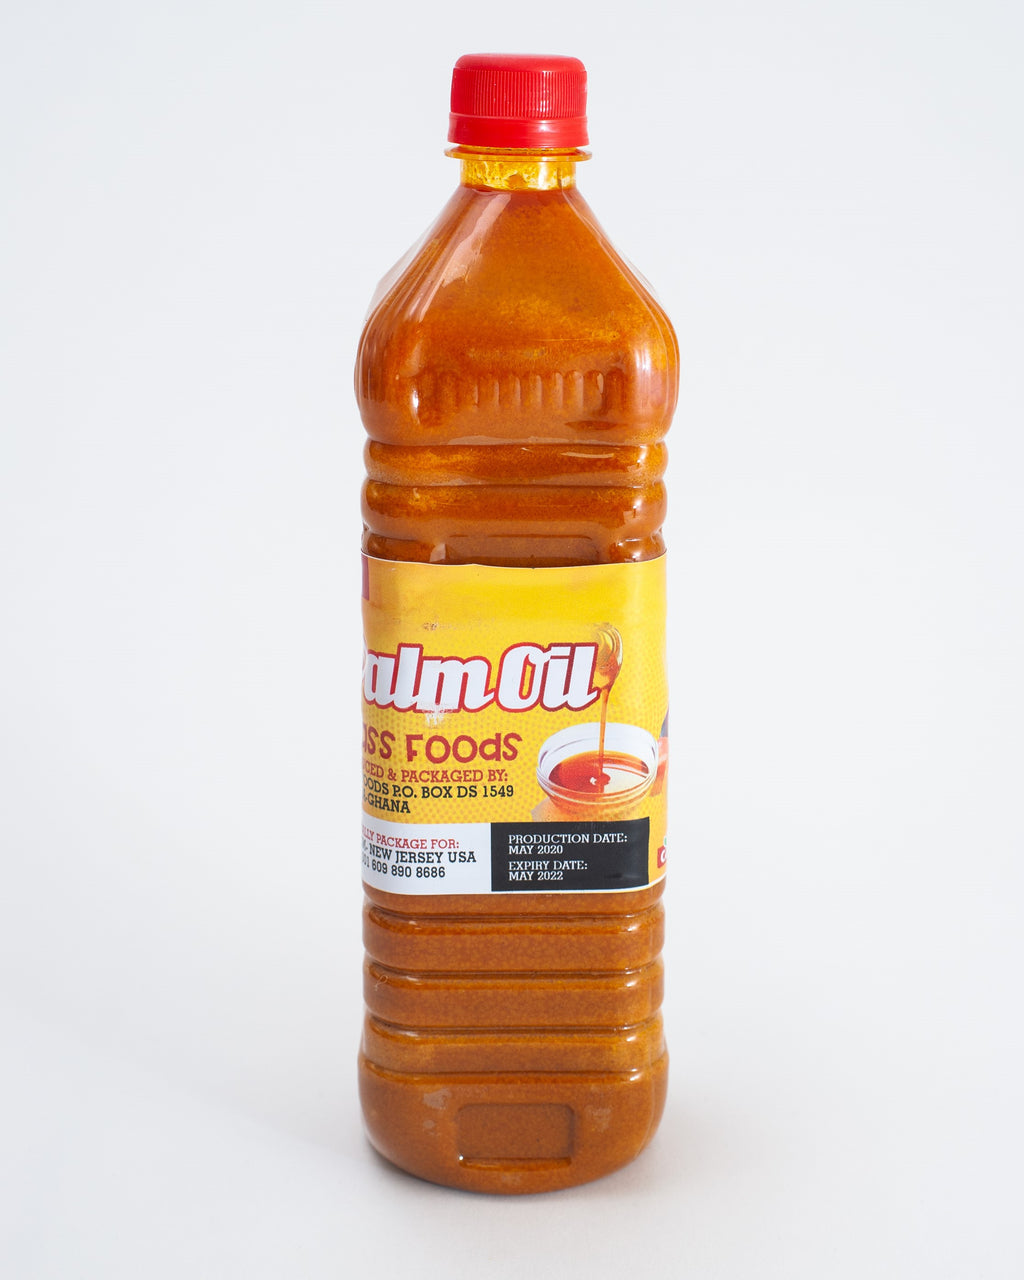 Pure Palm Oil & Palm Kernel Oil From Ghana (25 Liters) | OTI-GATI